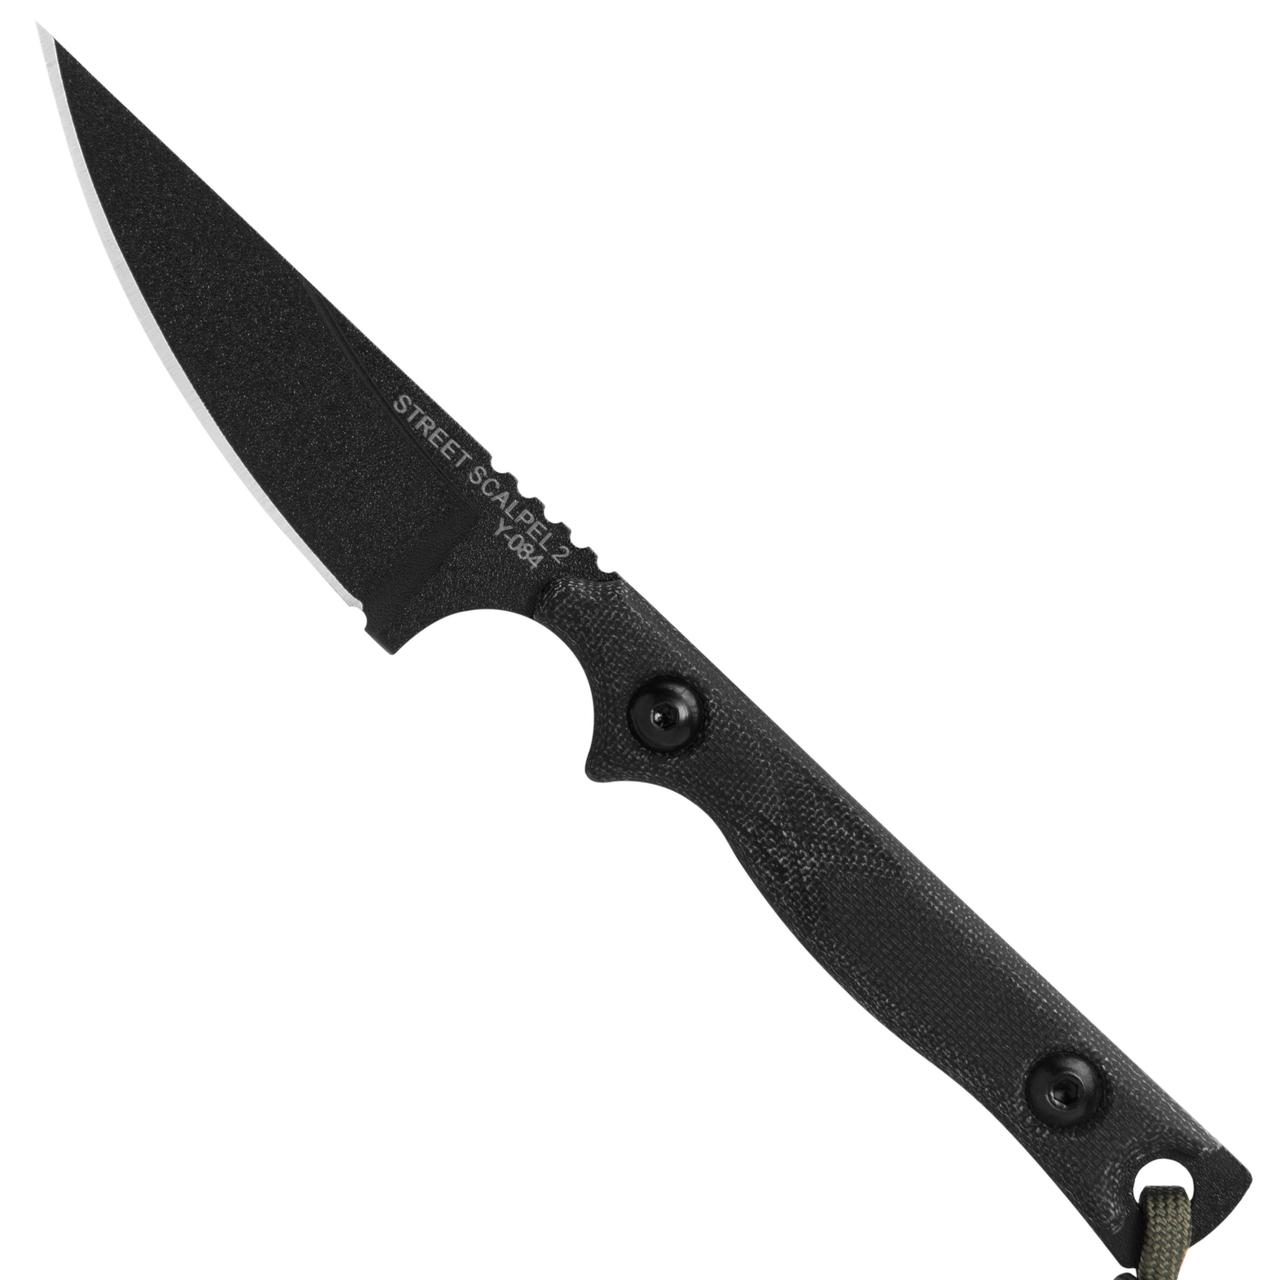 Knife Review: TOPS Street Scalpel 2.0 - BladeOps